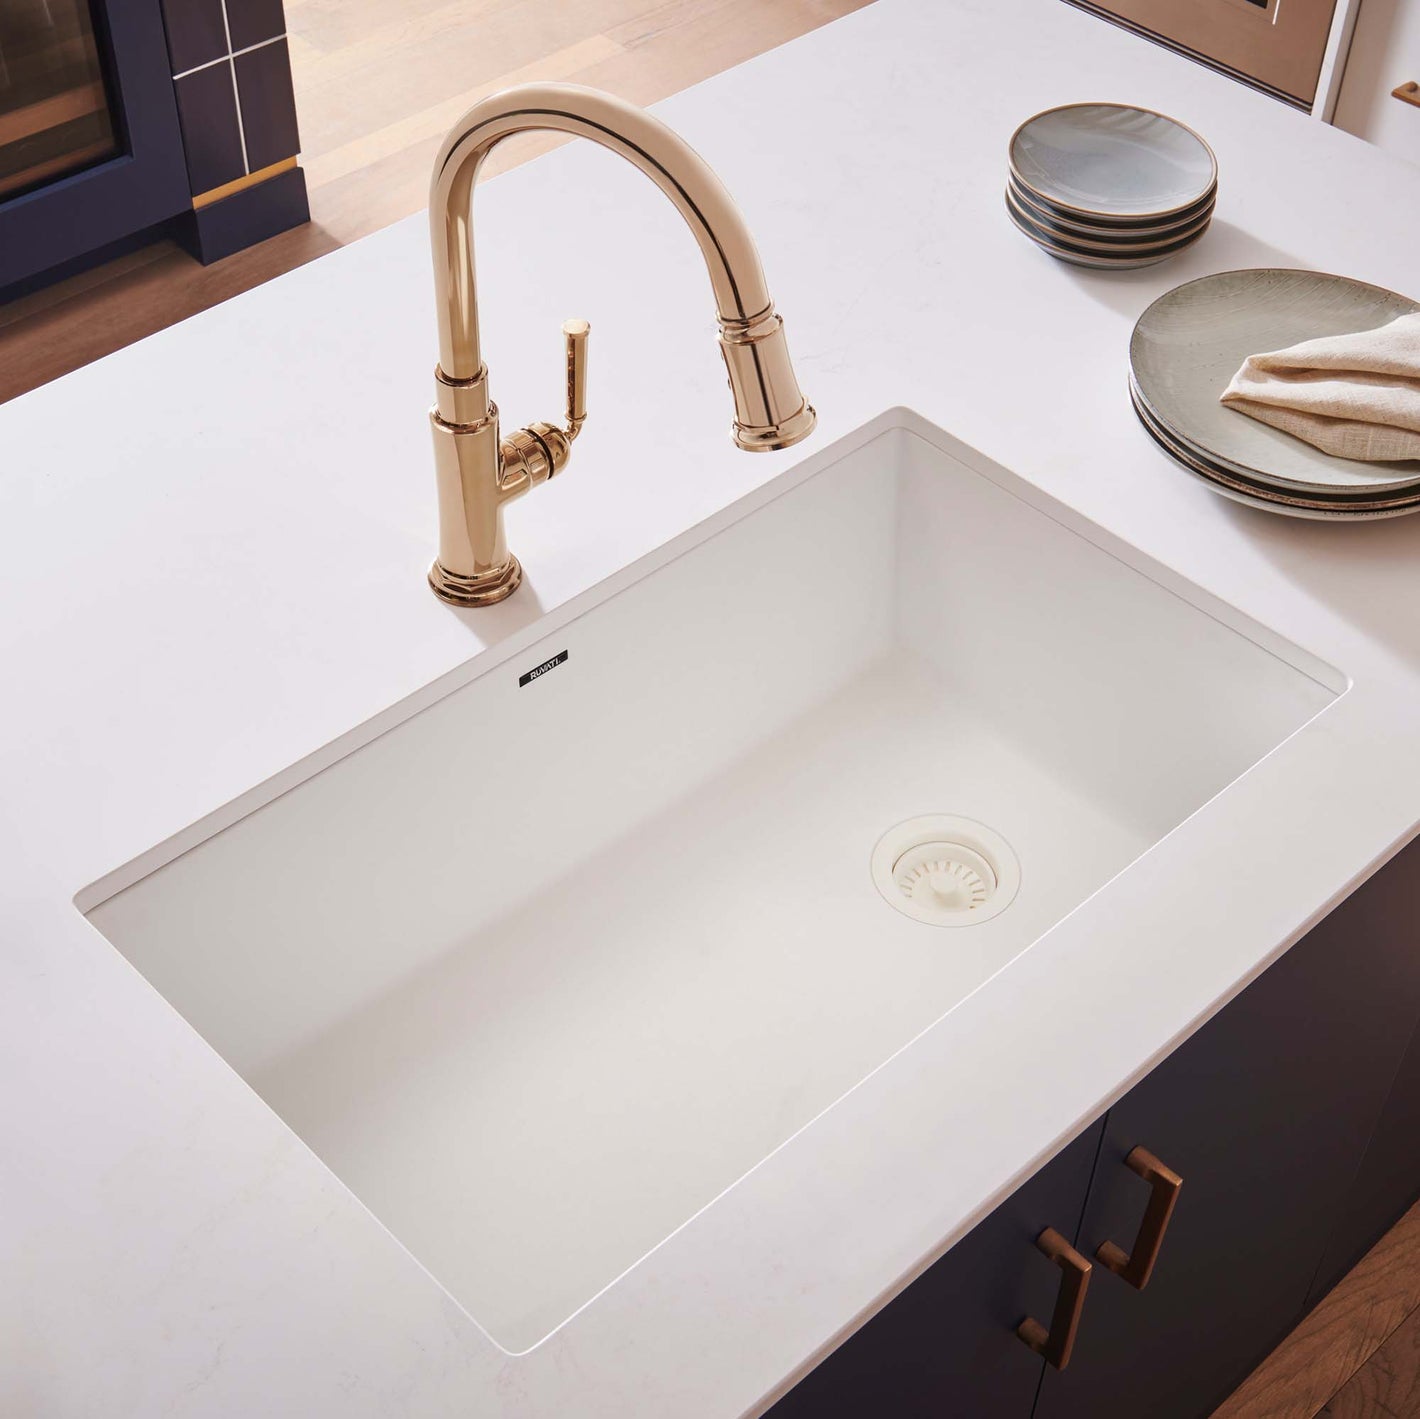 Ruvati 32 x 19 inch epiGranite Undermount Granite Composite Single Bowl Kitchen Sink – Arctic White – RVG2033WH